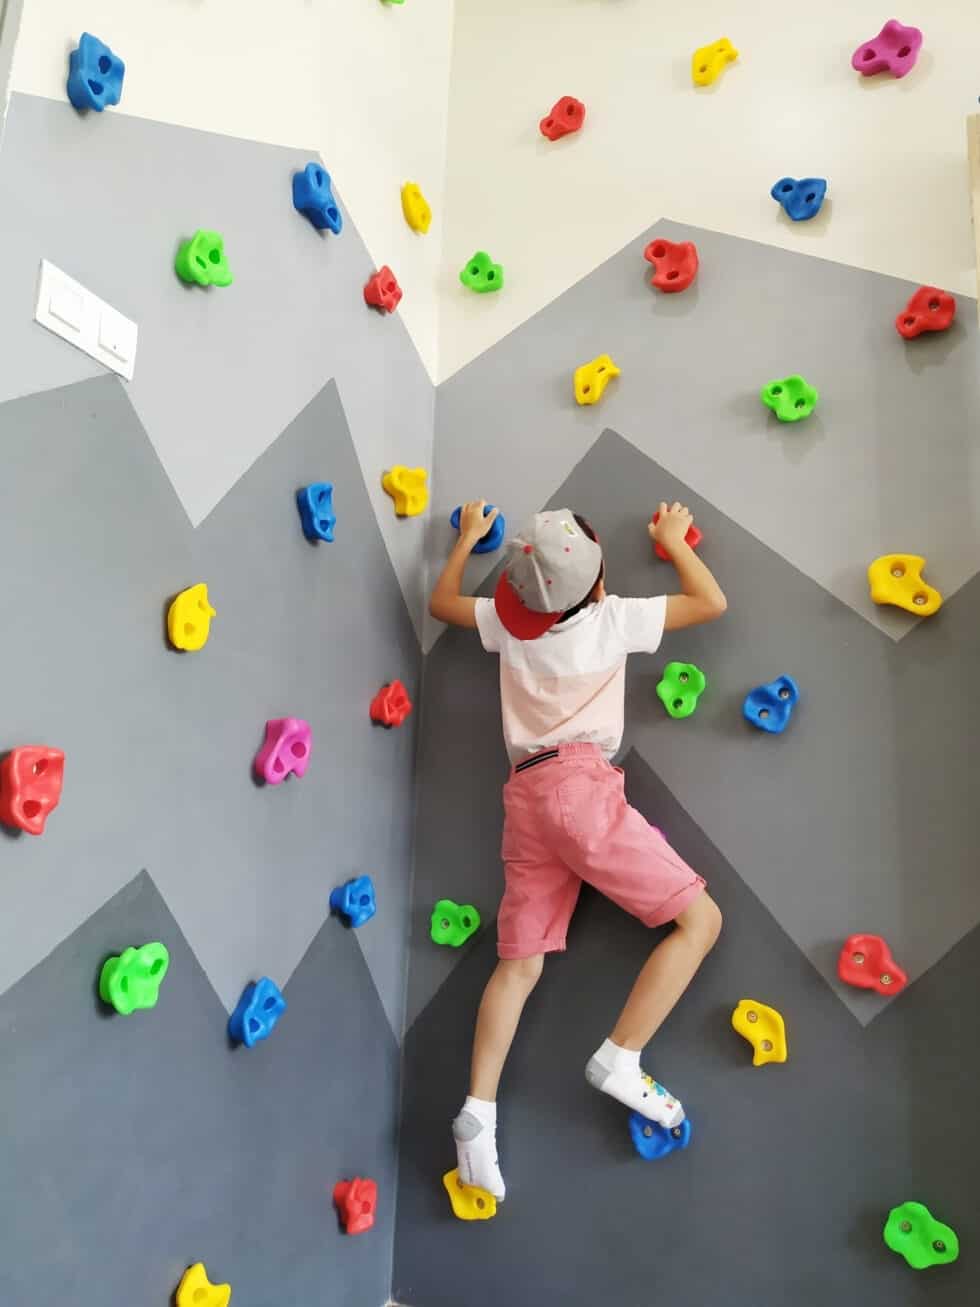 Kids Rock Climbing Wall